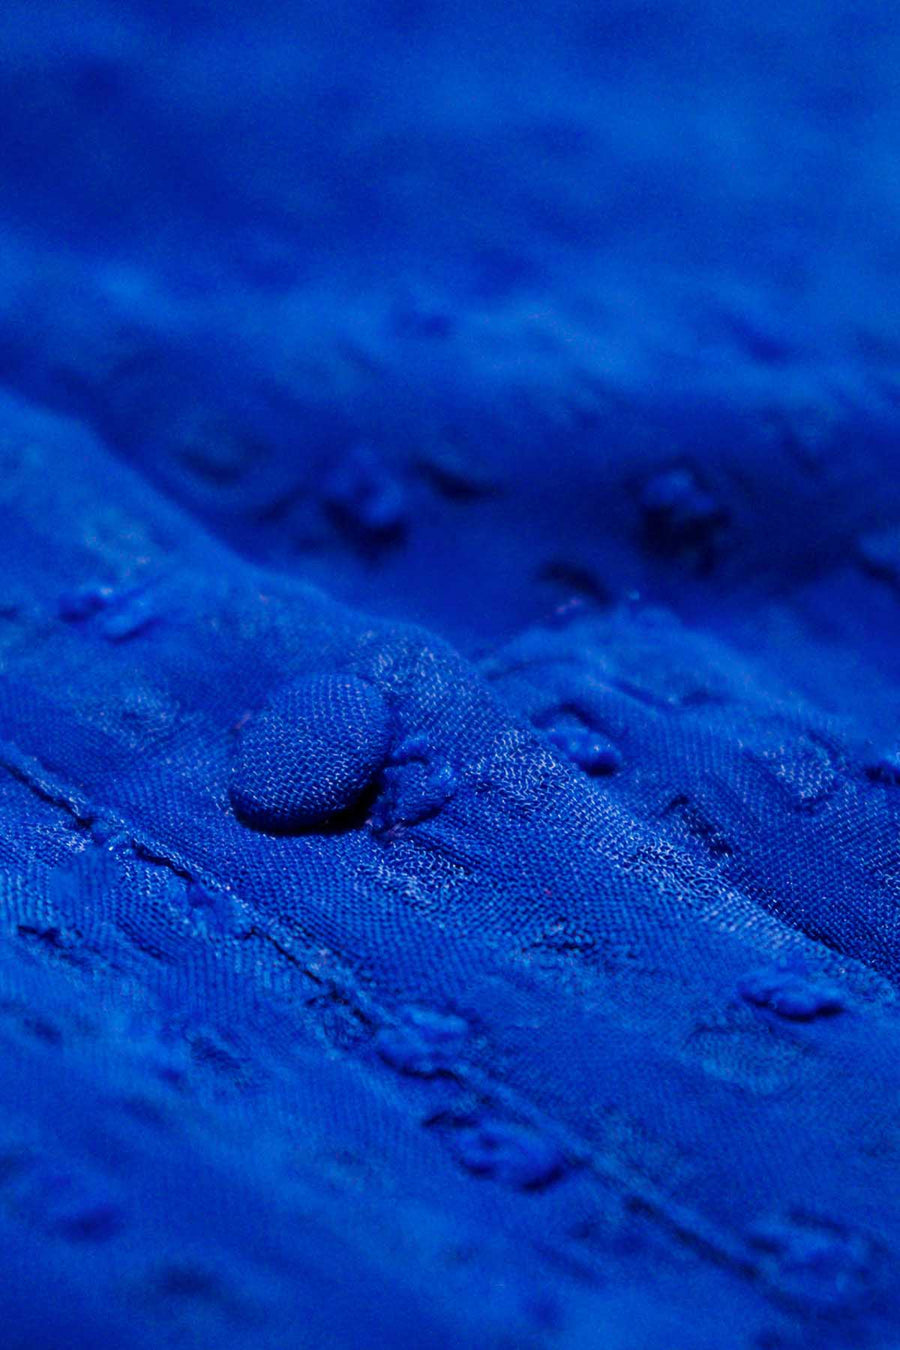 Dress Teagan | Blue